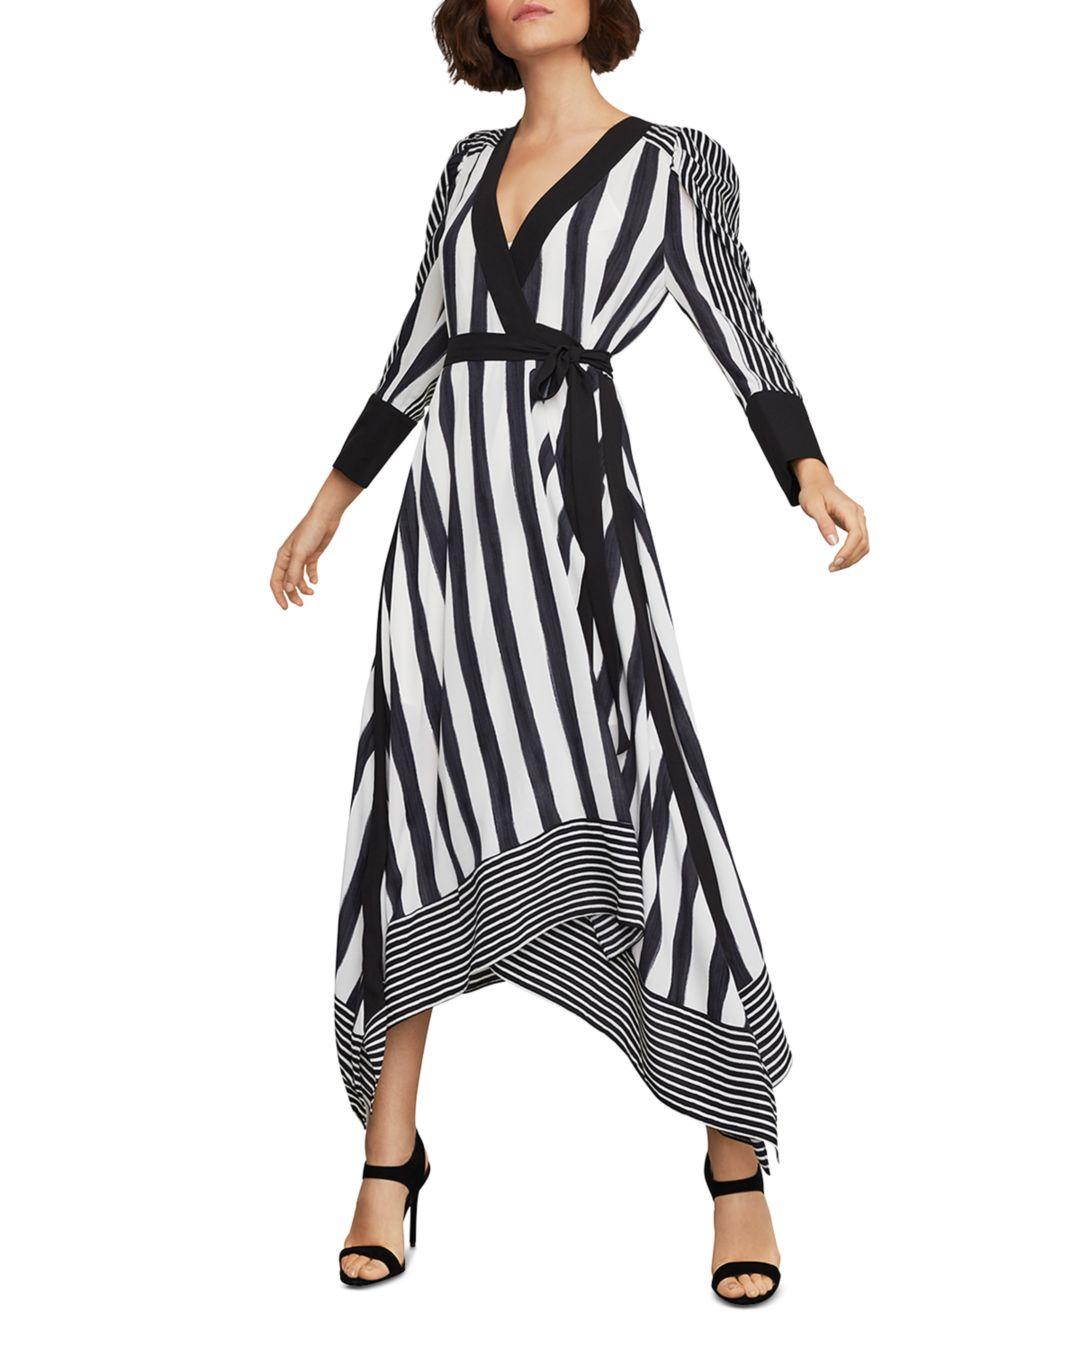 BCBGMAXAZRIA Synthetic Stripe Faux Wrap Dress in Black White (Black) - Lyst